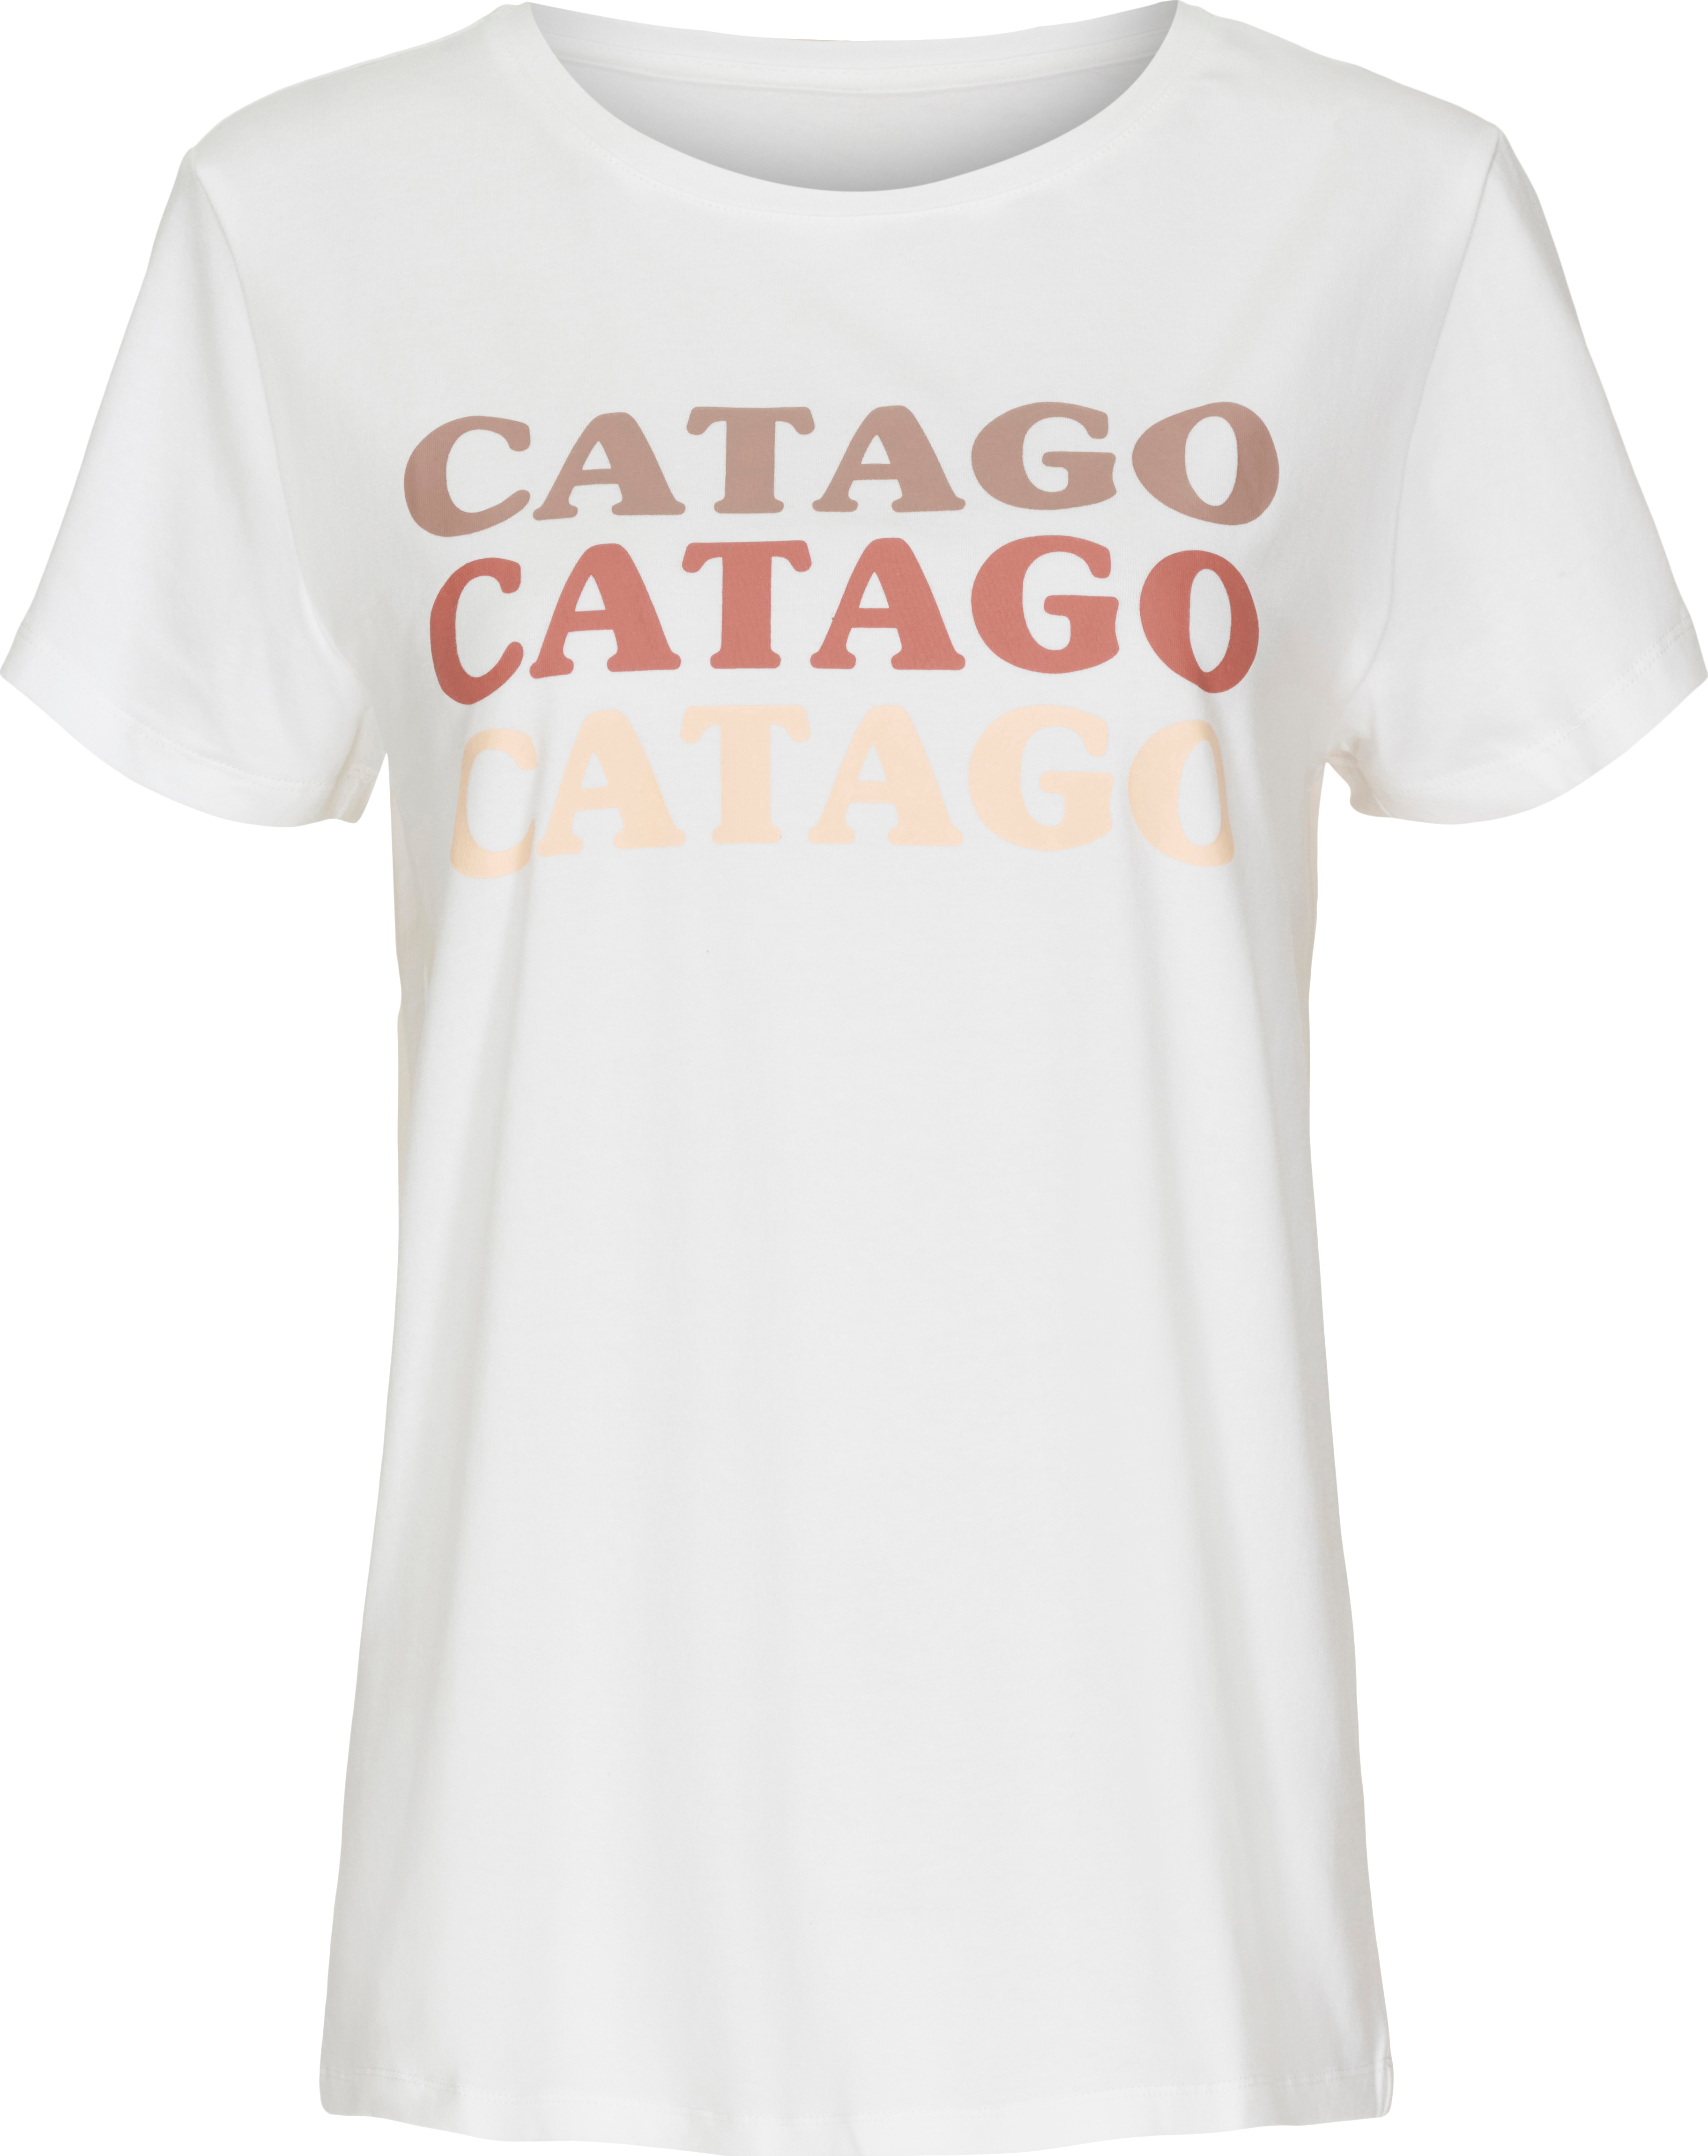 Catago Women’s Touch Short Sleeve White